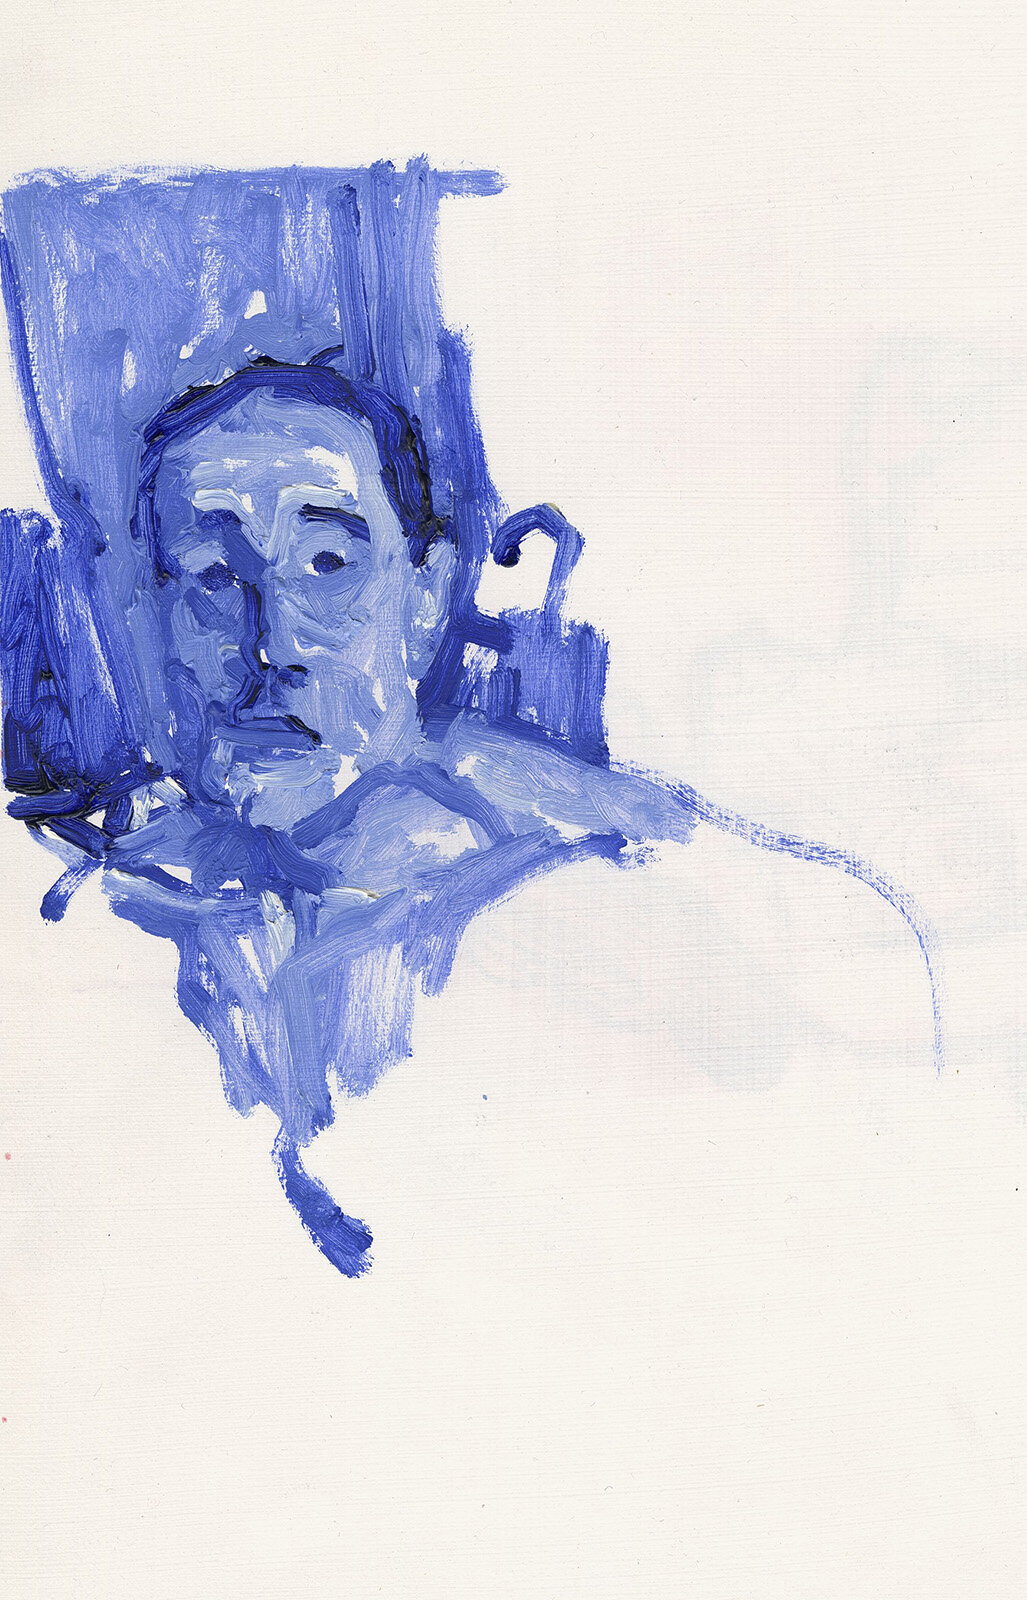 Blue Étienne, July 5, 2020 #1 (30-min. painting)